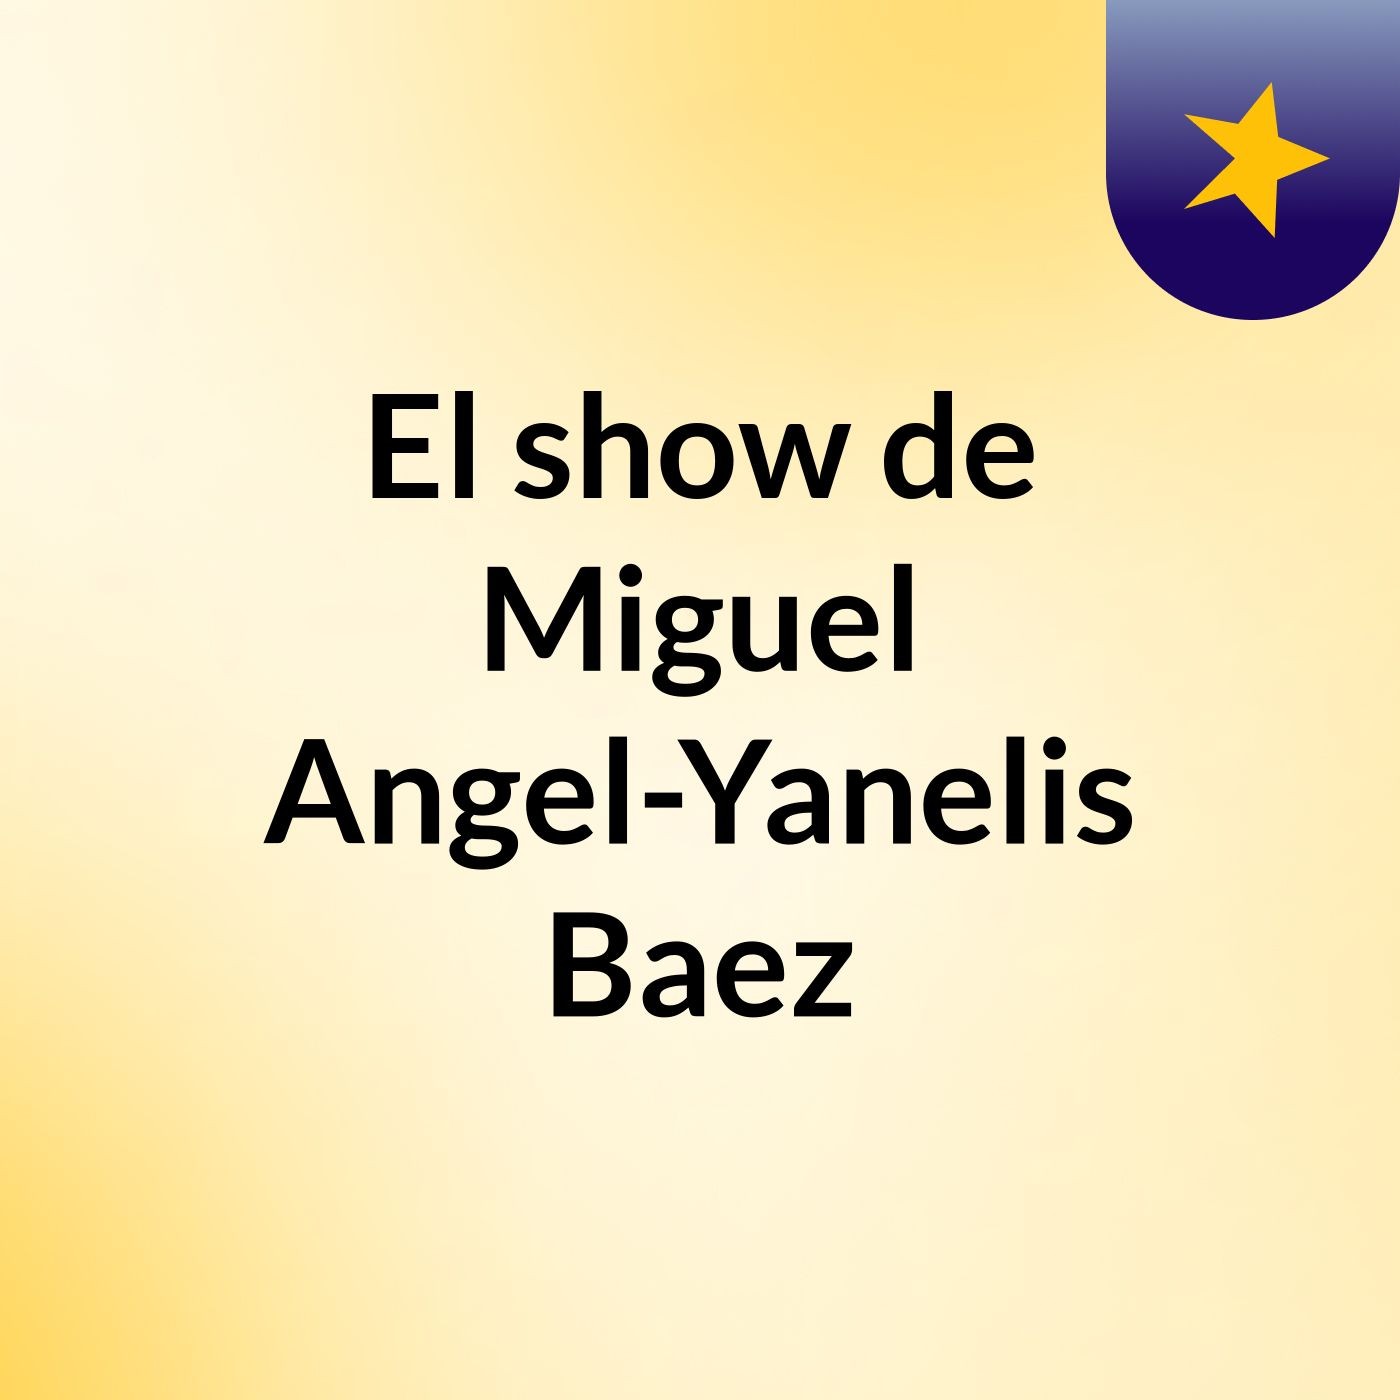 El show de Miguel Angel-Yanelis Baez